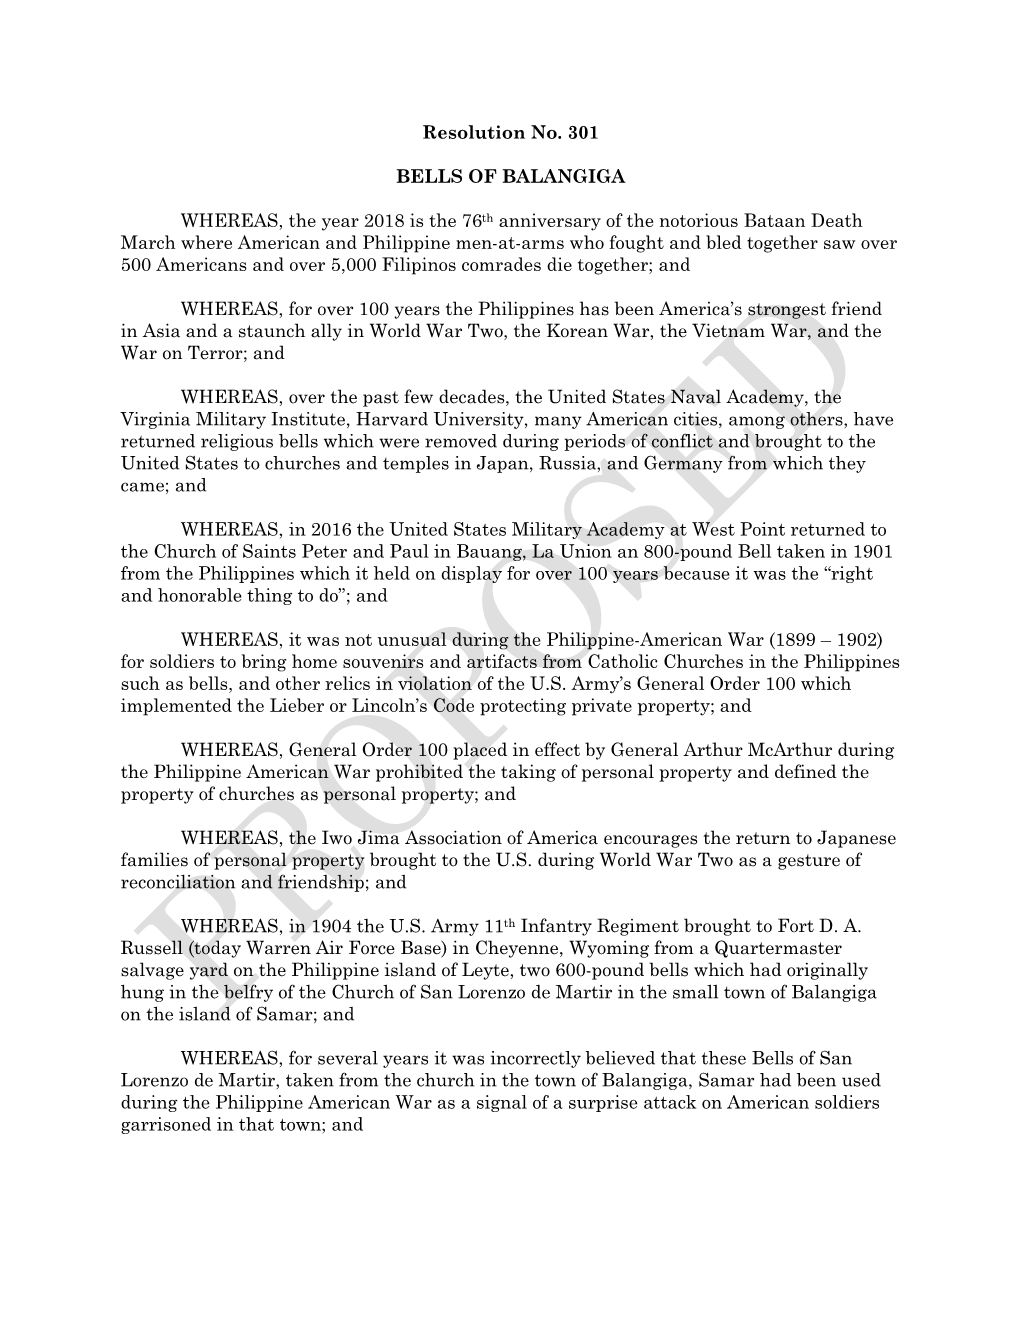 Resolution No. 301 BELLS of BALANGIGA WHEREAS, The